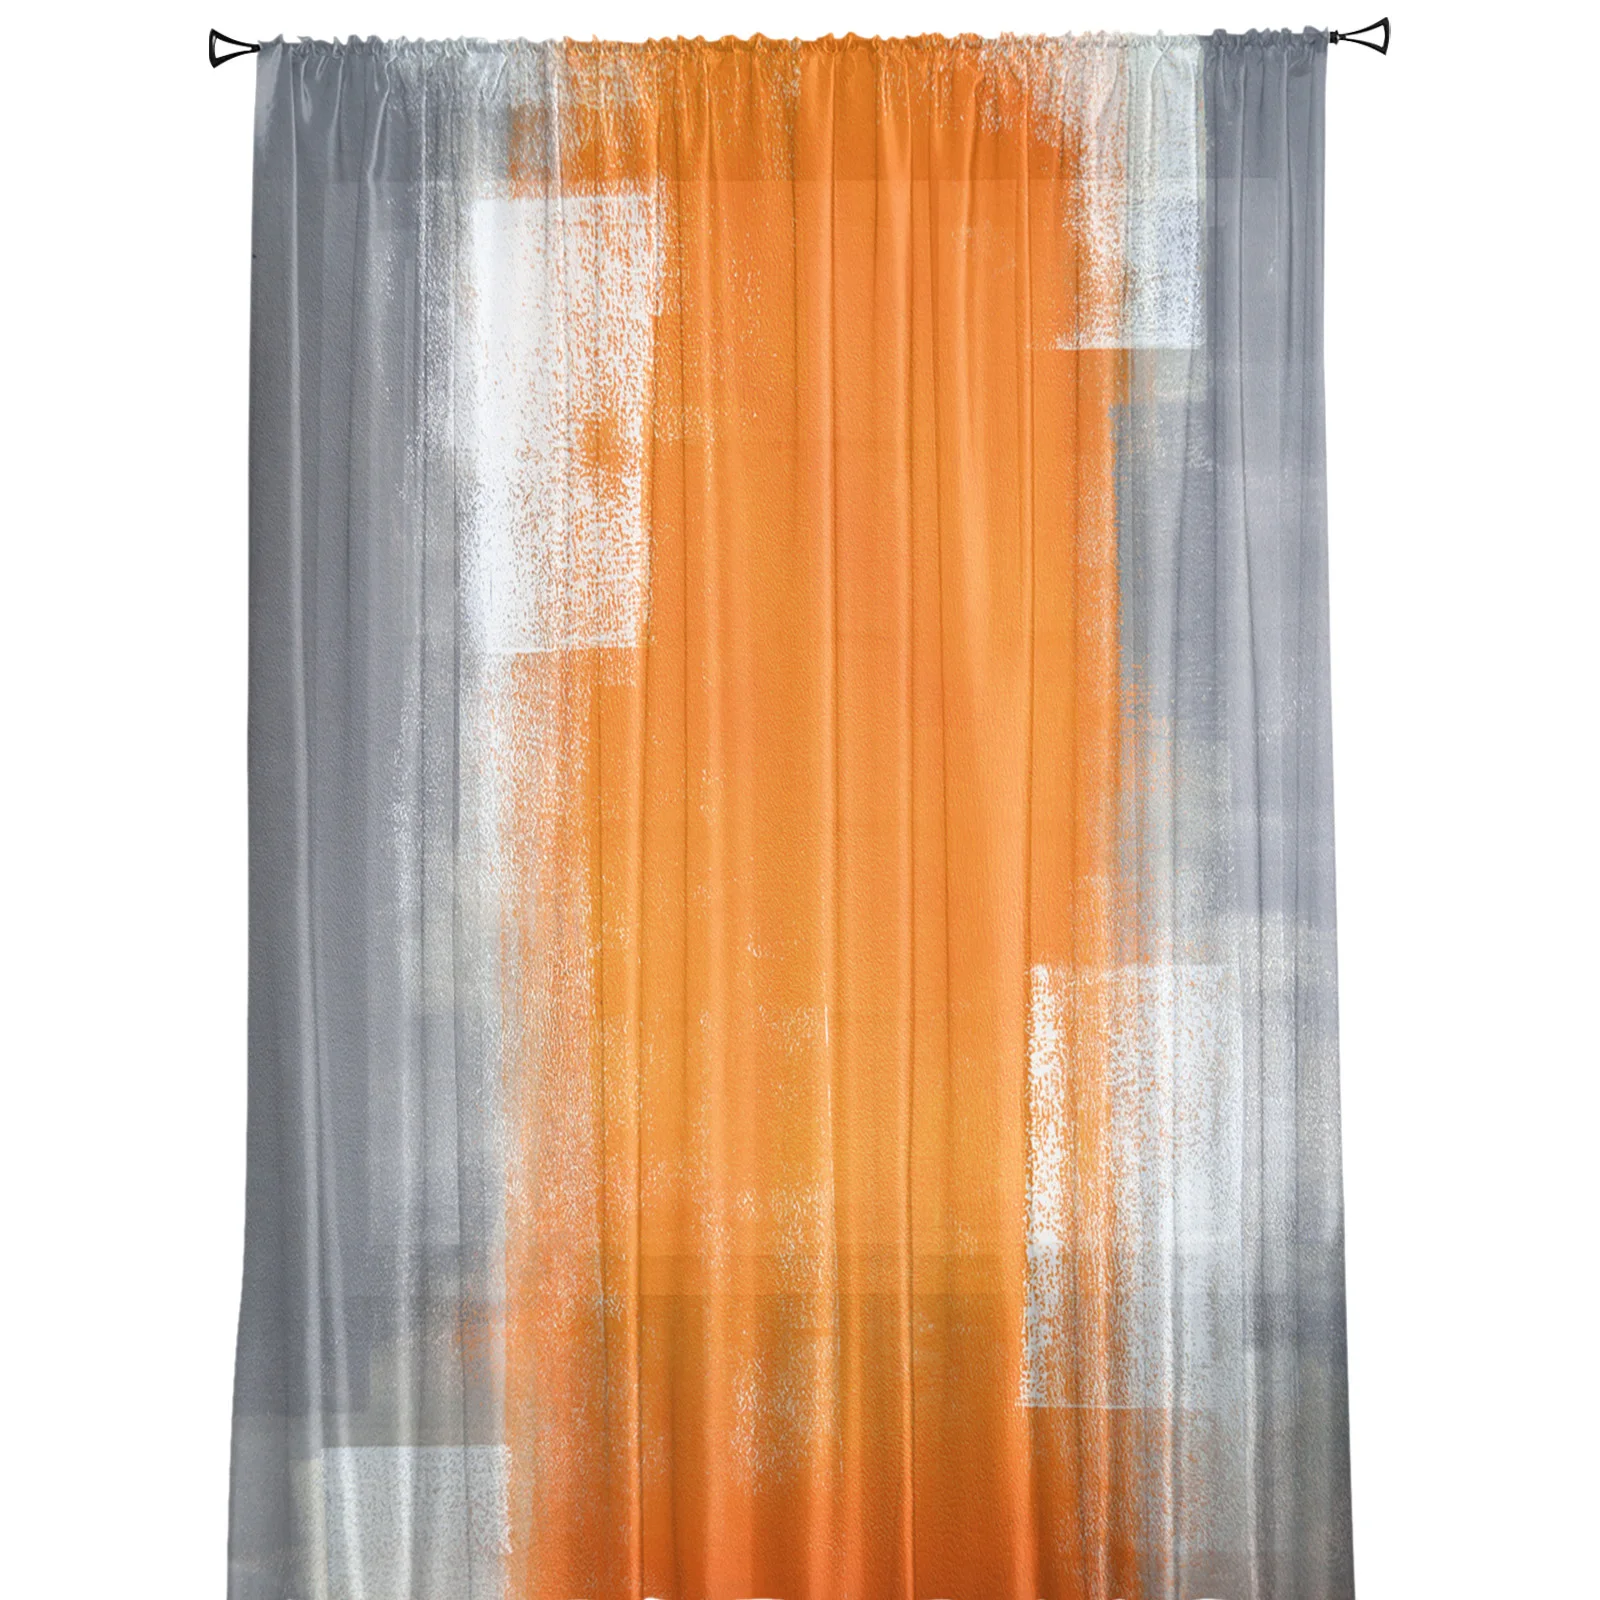 Cortinas de janela transparente femininas africanas, cortinas